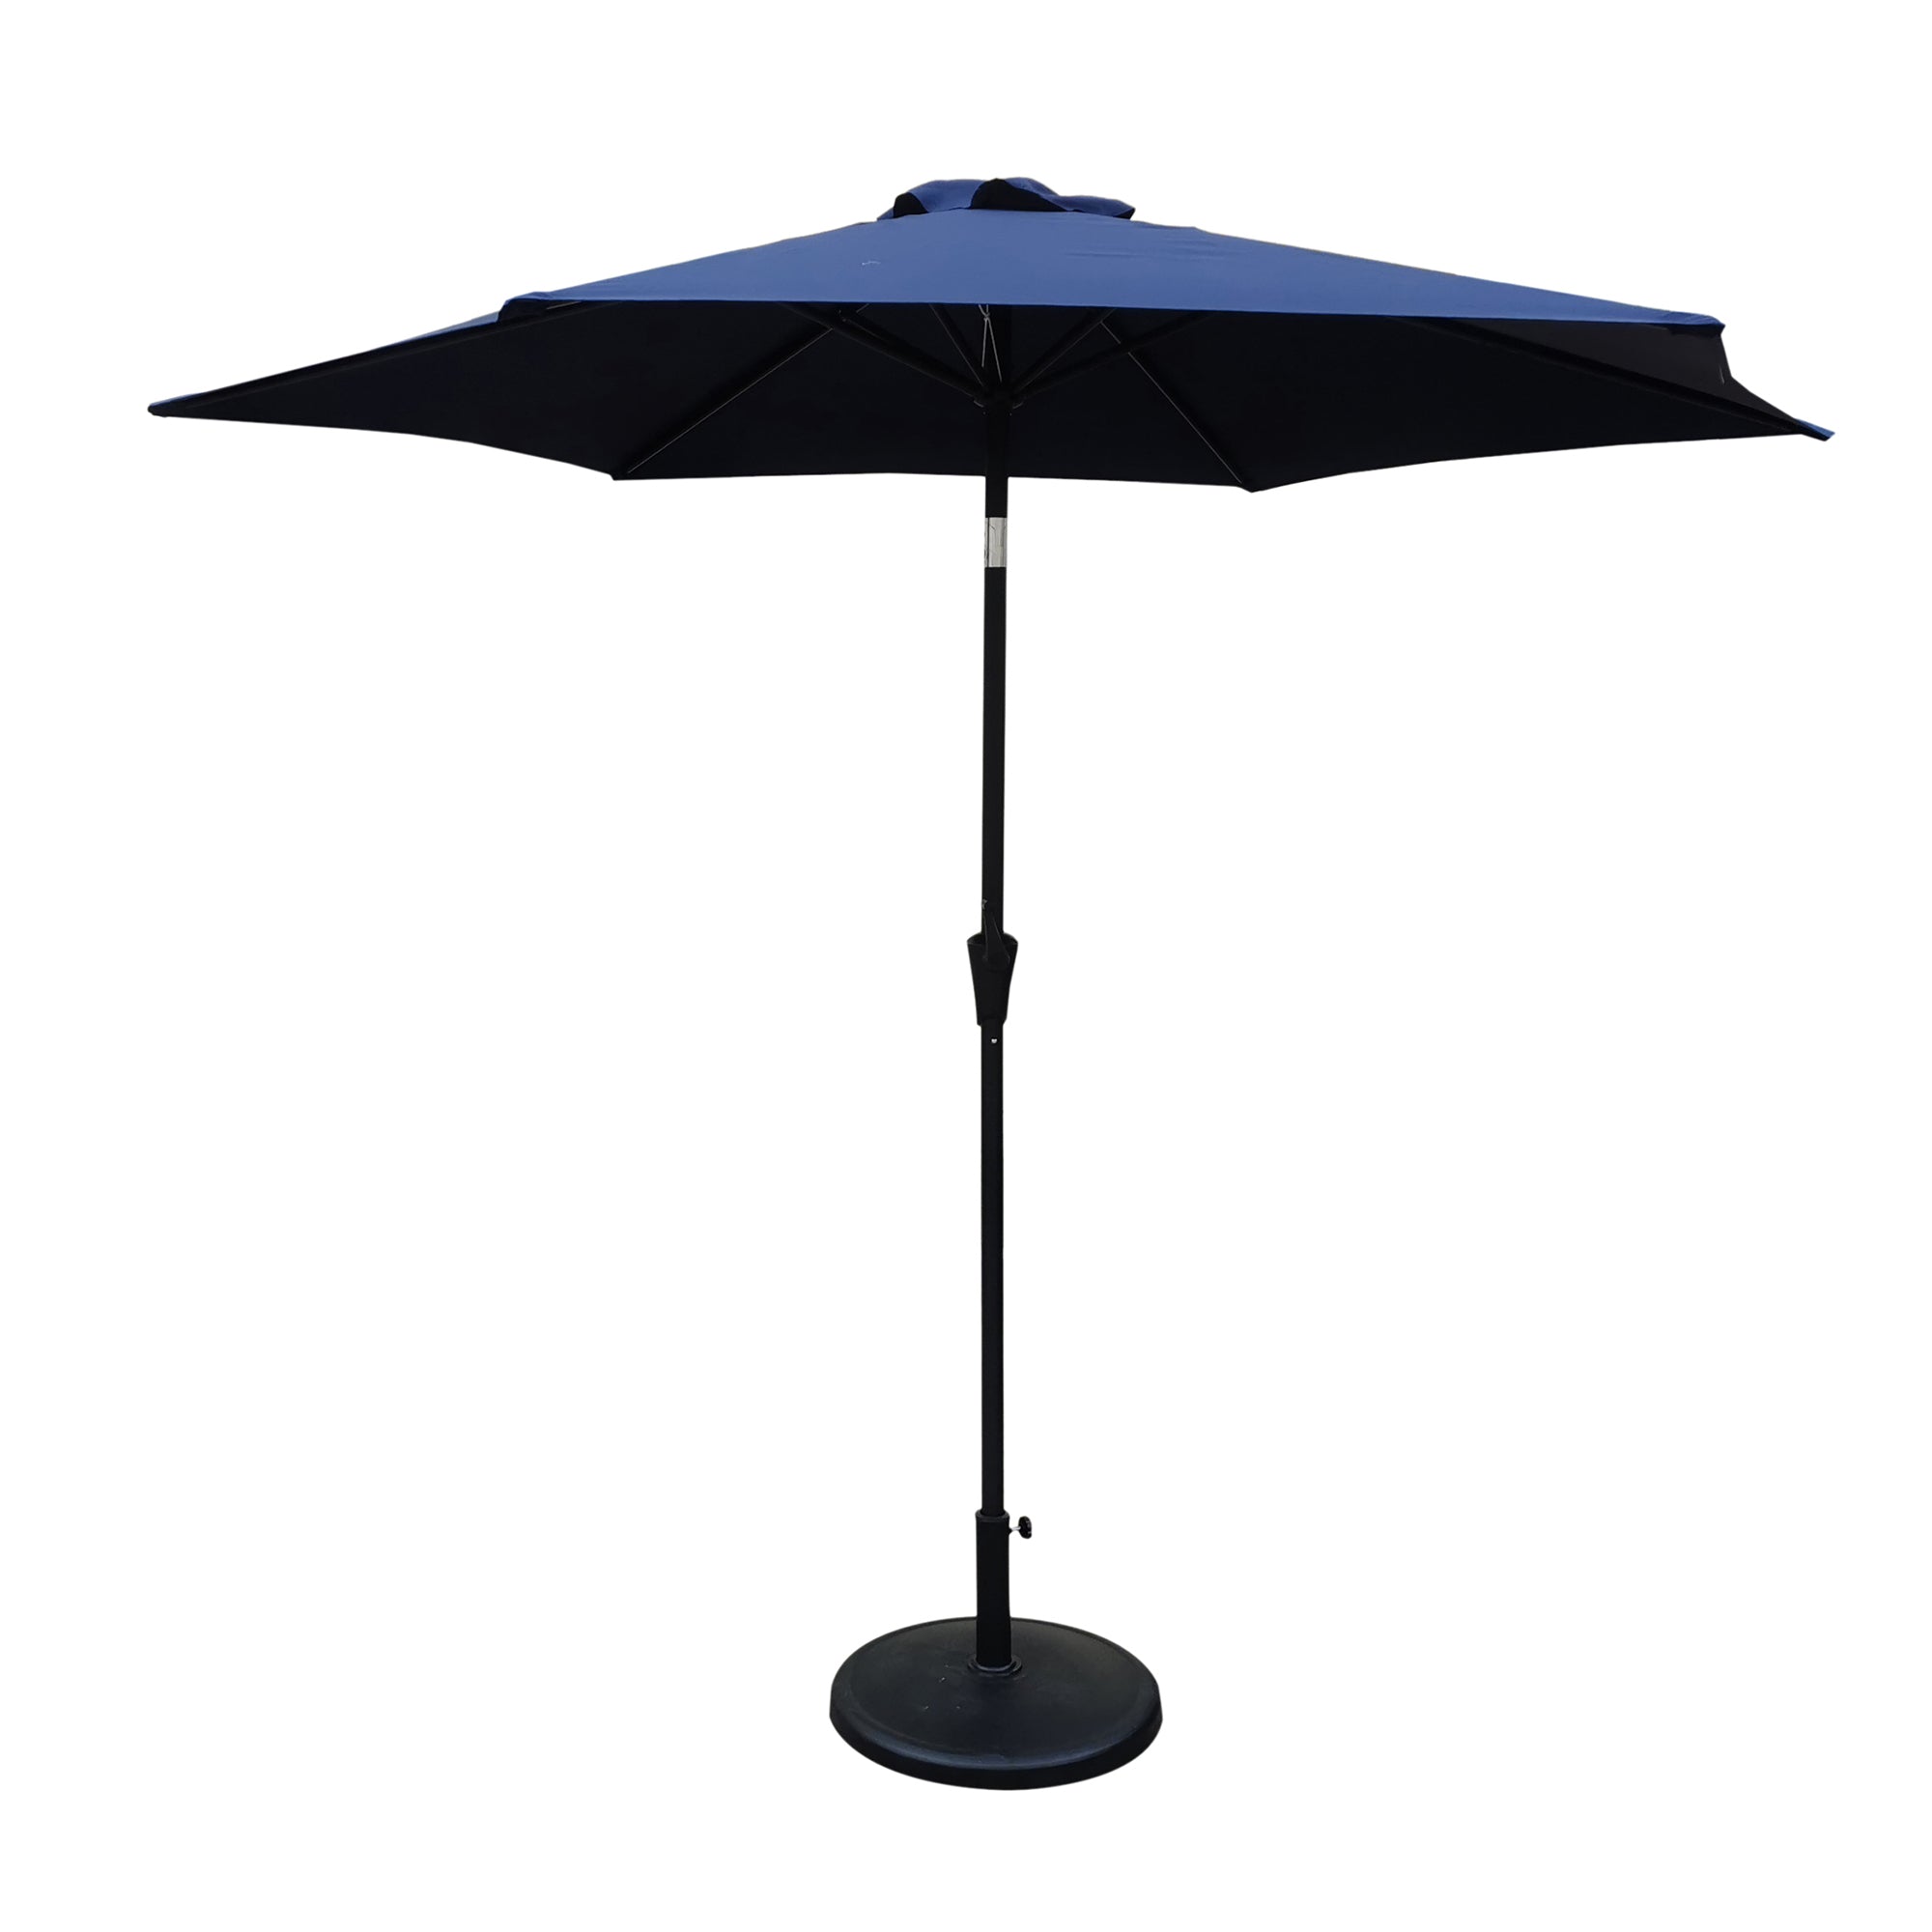 8.8-feet-Outdoor-Aluminum-Patio-Umbrella,-with-42-pounds-Round-Resin-Umbrella-Base,-Push-Button-Tilt-and-Crank-lift,-Navy-Blue-